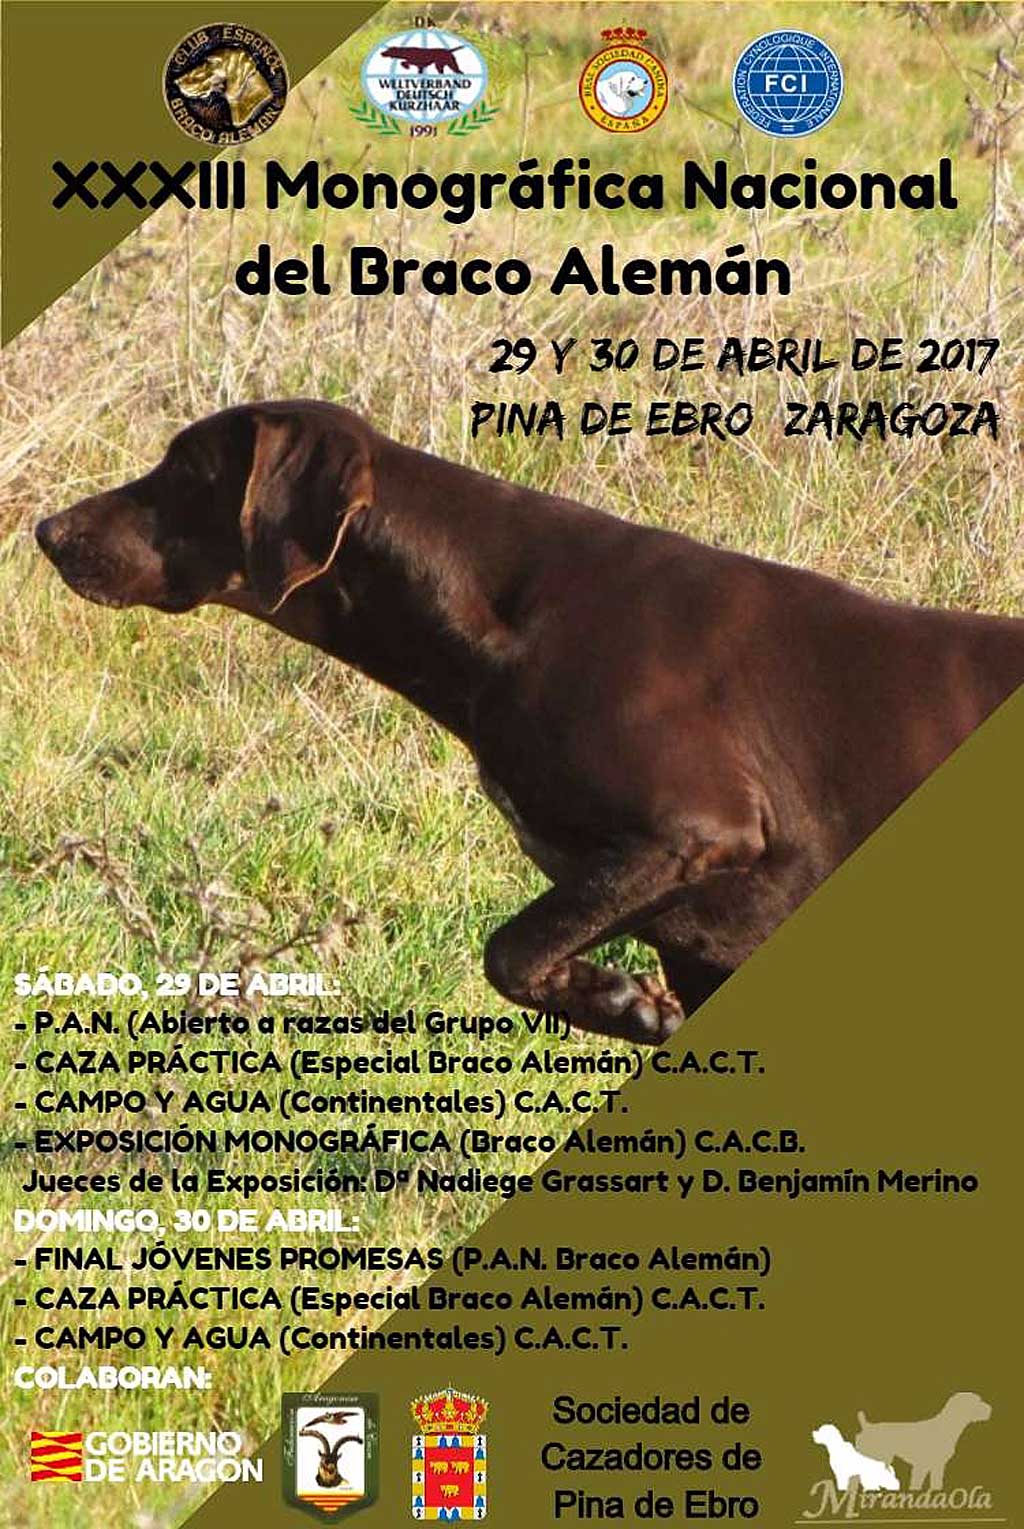 XXXIII Monográfica Nacional del Braco Alemán en Pina de Ebro (Zaragoza) .